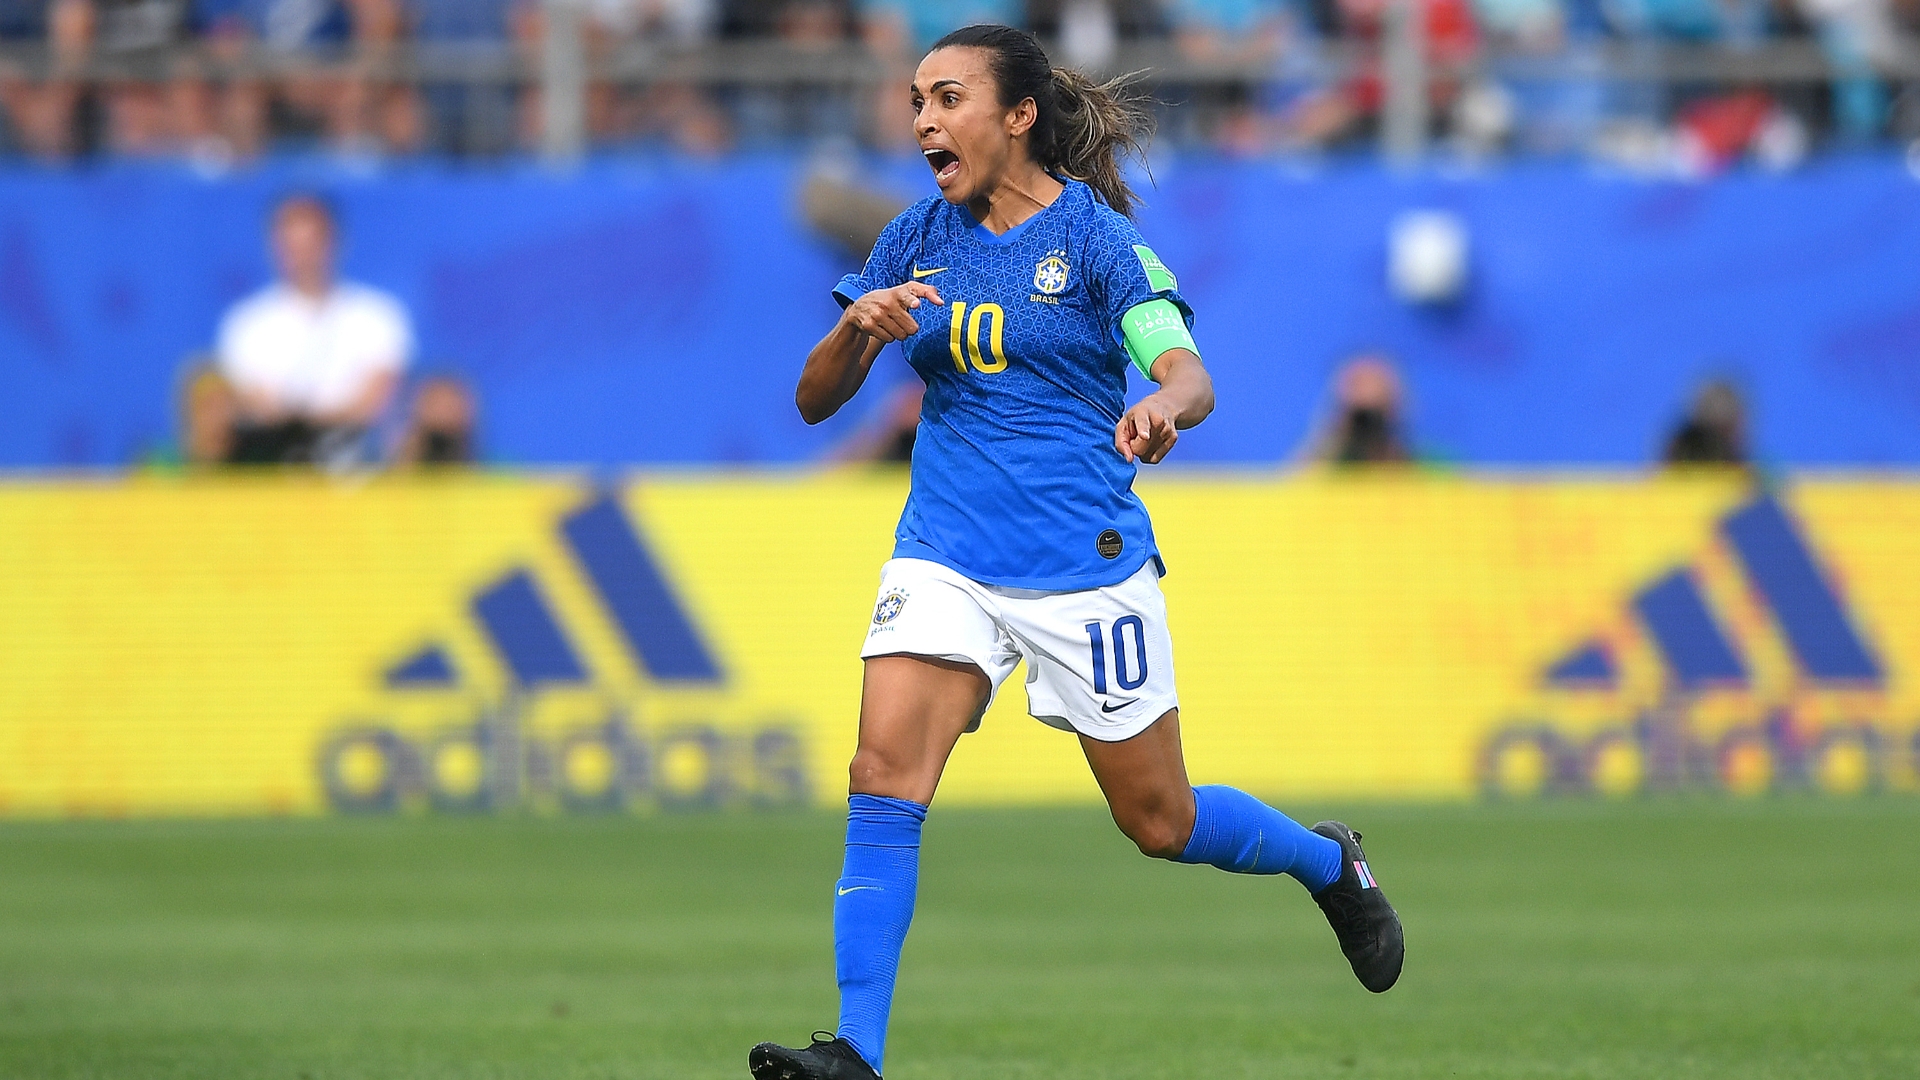 Brazil vs Panama Predictions Seleção to Overpower Panama in Women’s